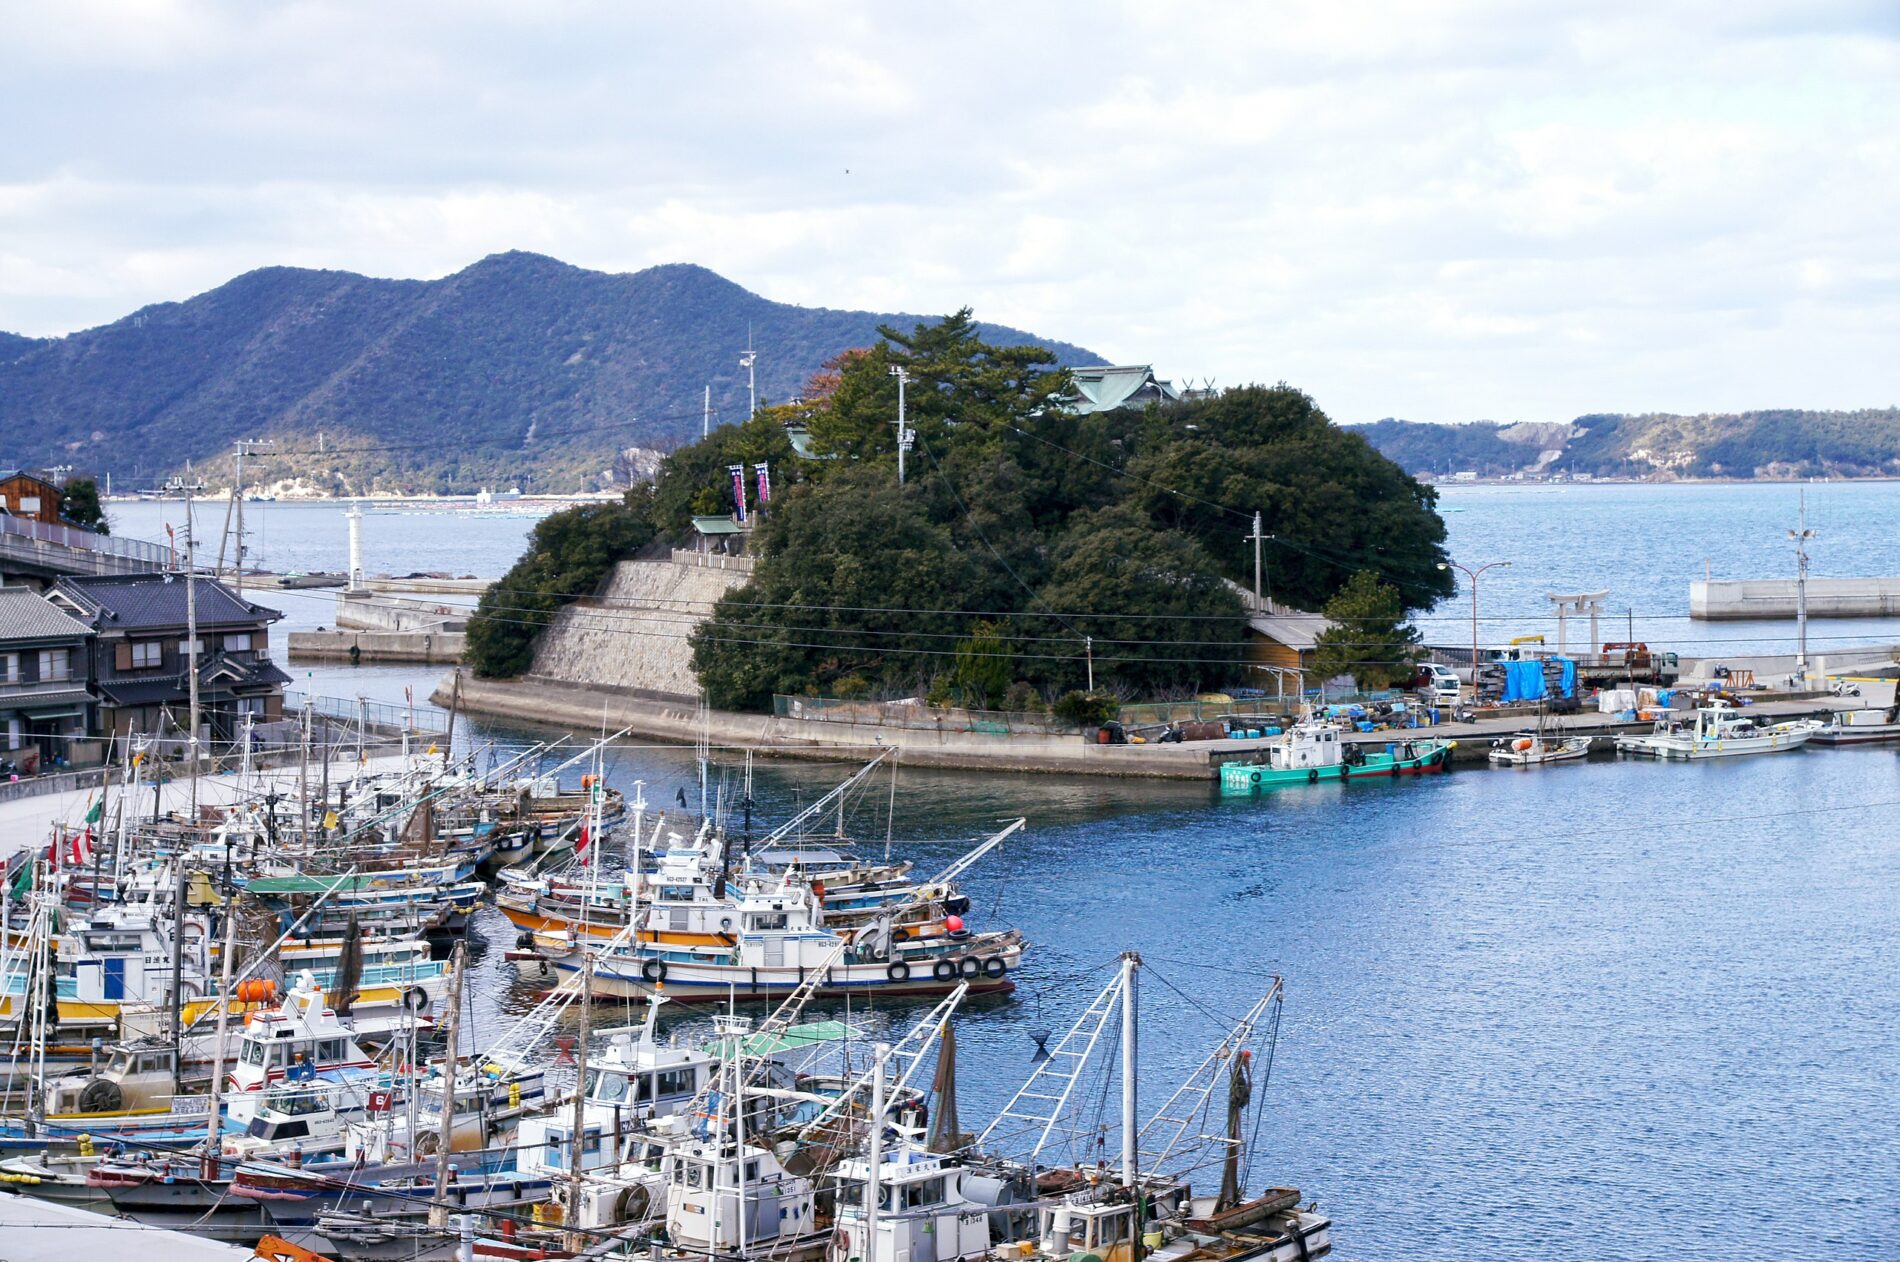 Schöner Ausblick auf Bozejima, einer der Ieshima-Inseln. (Foto: 663highland auf wikimedia commons https://commons.wikimedia.org/wiki/File:Bozeji-ato_Ieshima_Himeji_Hyogo_pref_Japan01n.jpg, CC BY-SA 3.0)